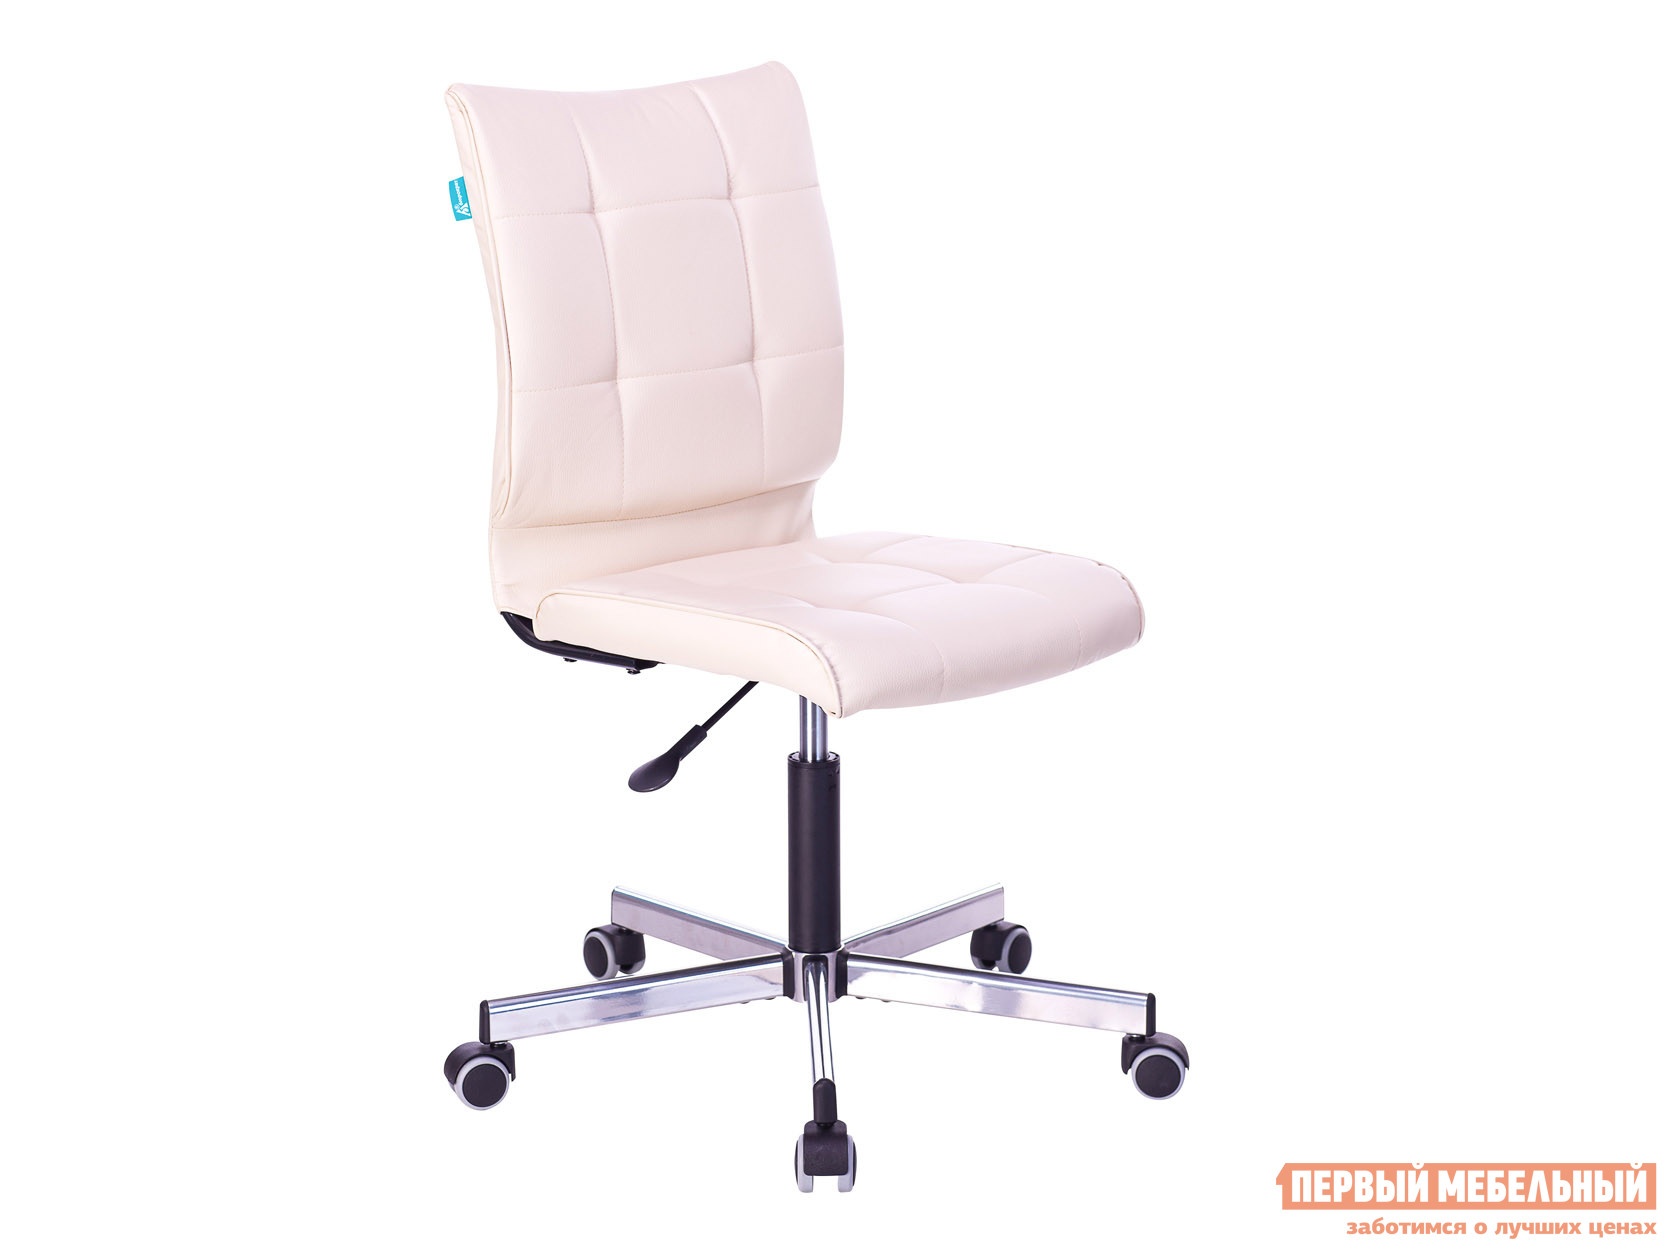 Офисное кресло ch-330m or-12 иск. кожа светло-бежевая preview 1